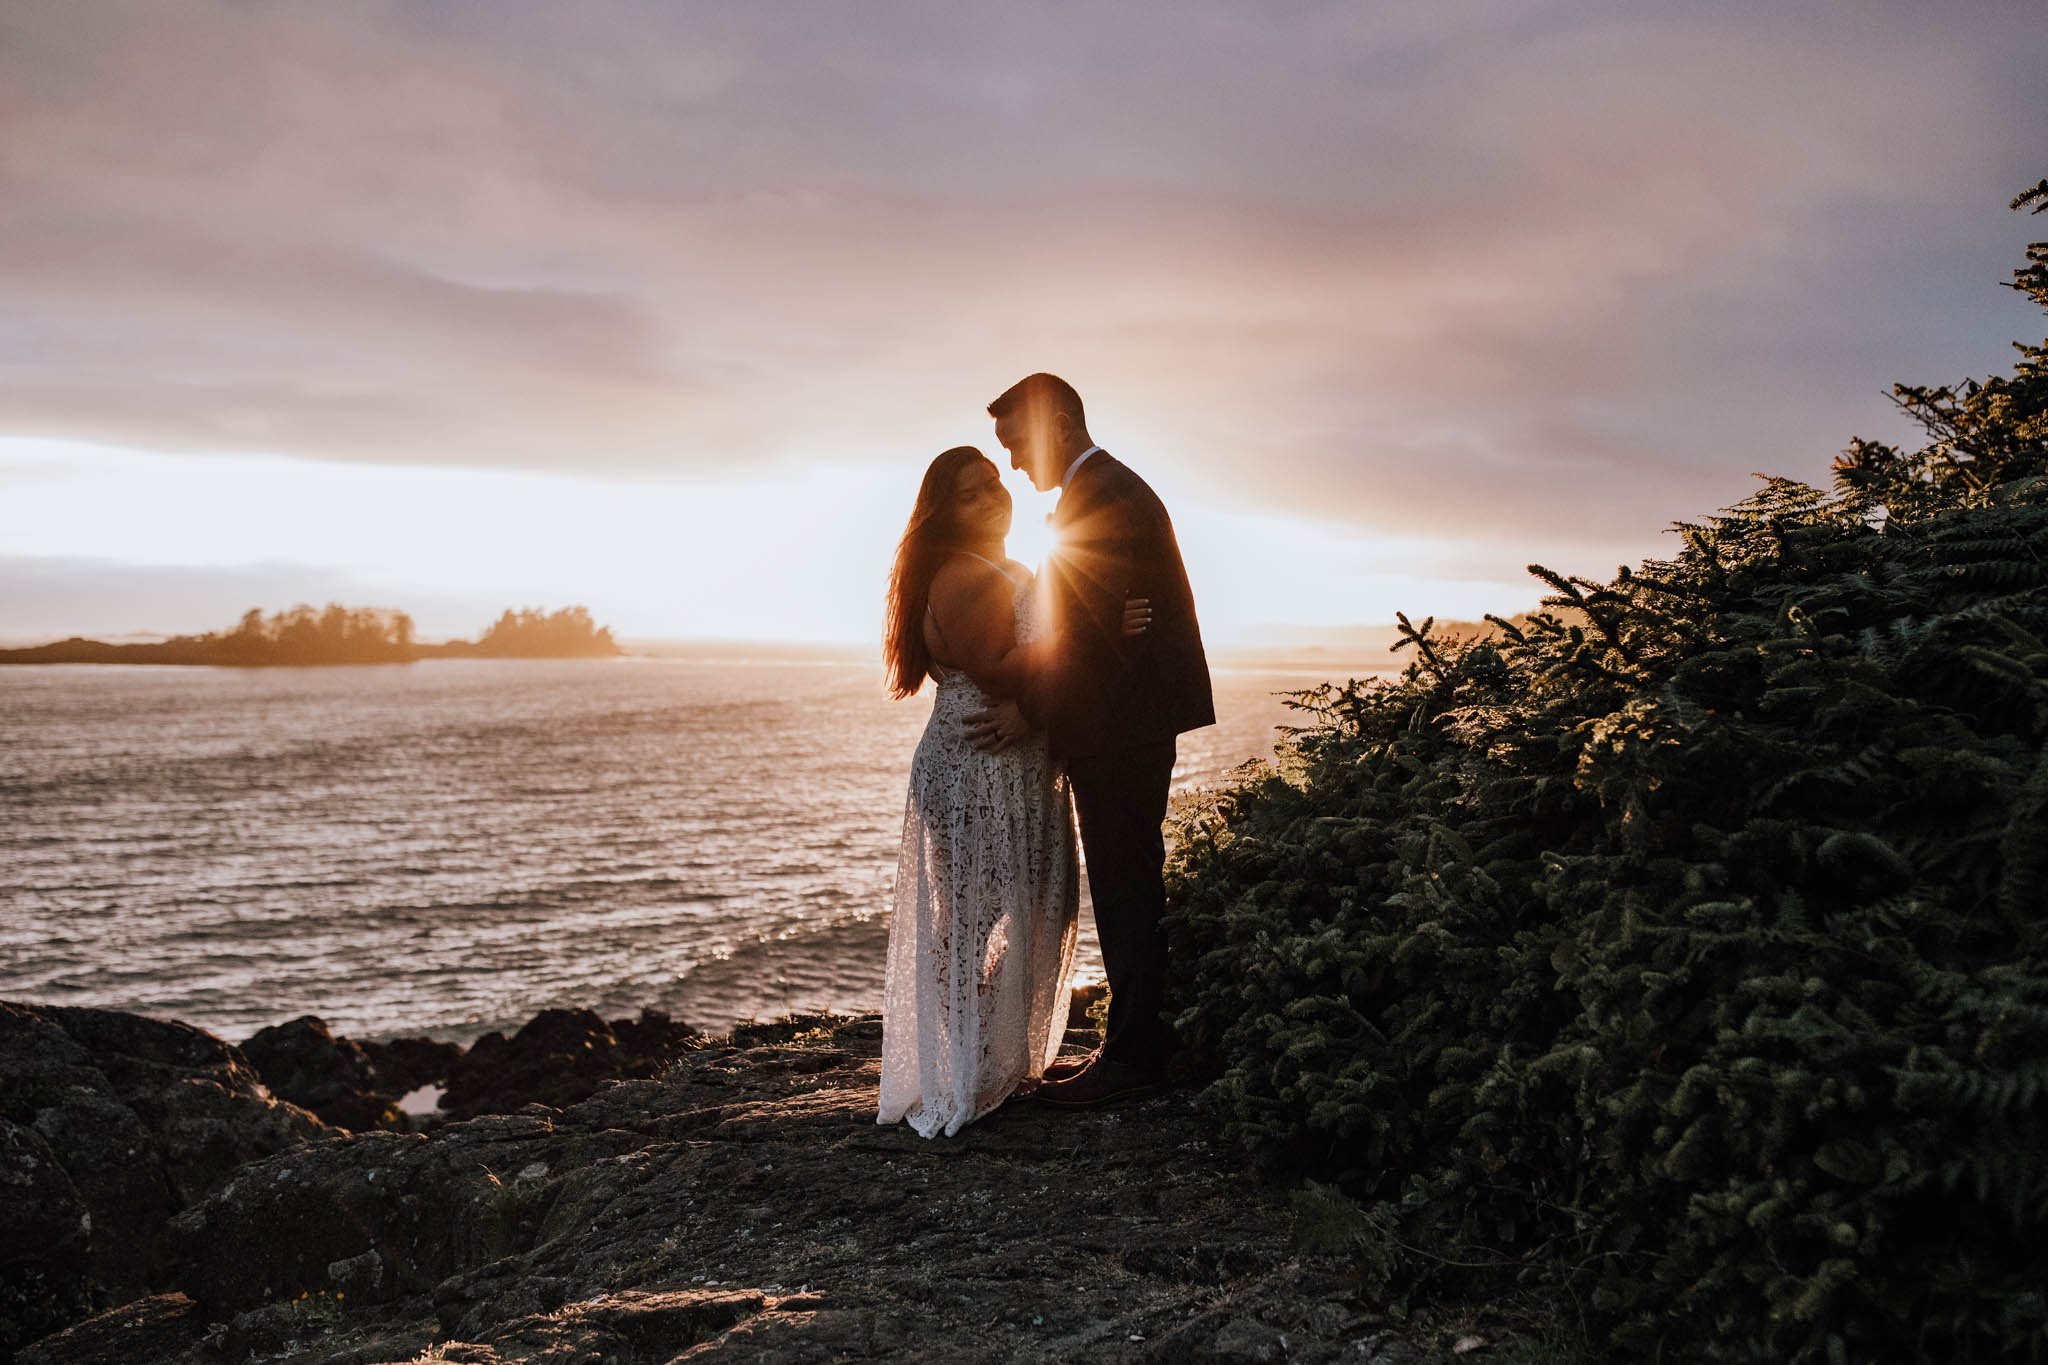 Clarize and David Elopement - Tofino Vancouver Island British Columbia - Elyse Anna Photography-2516.jpg